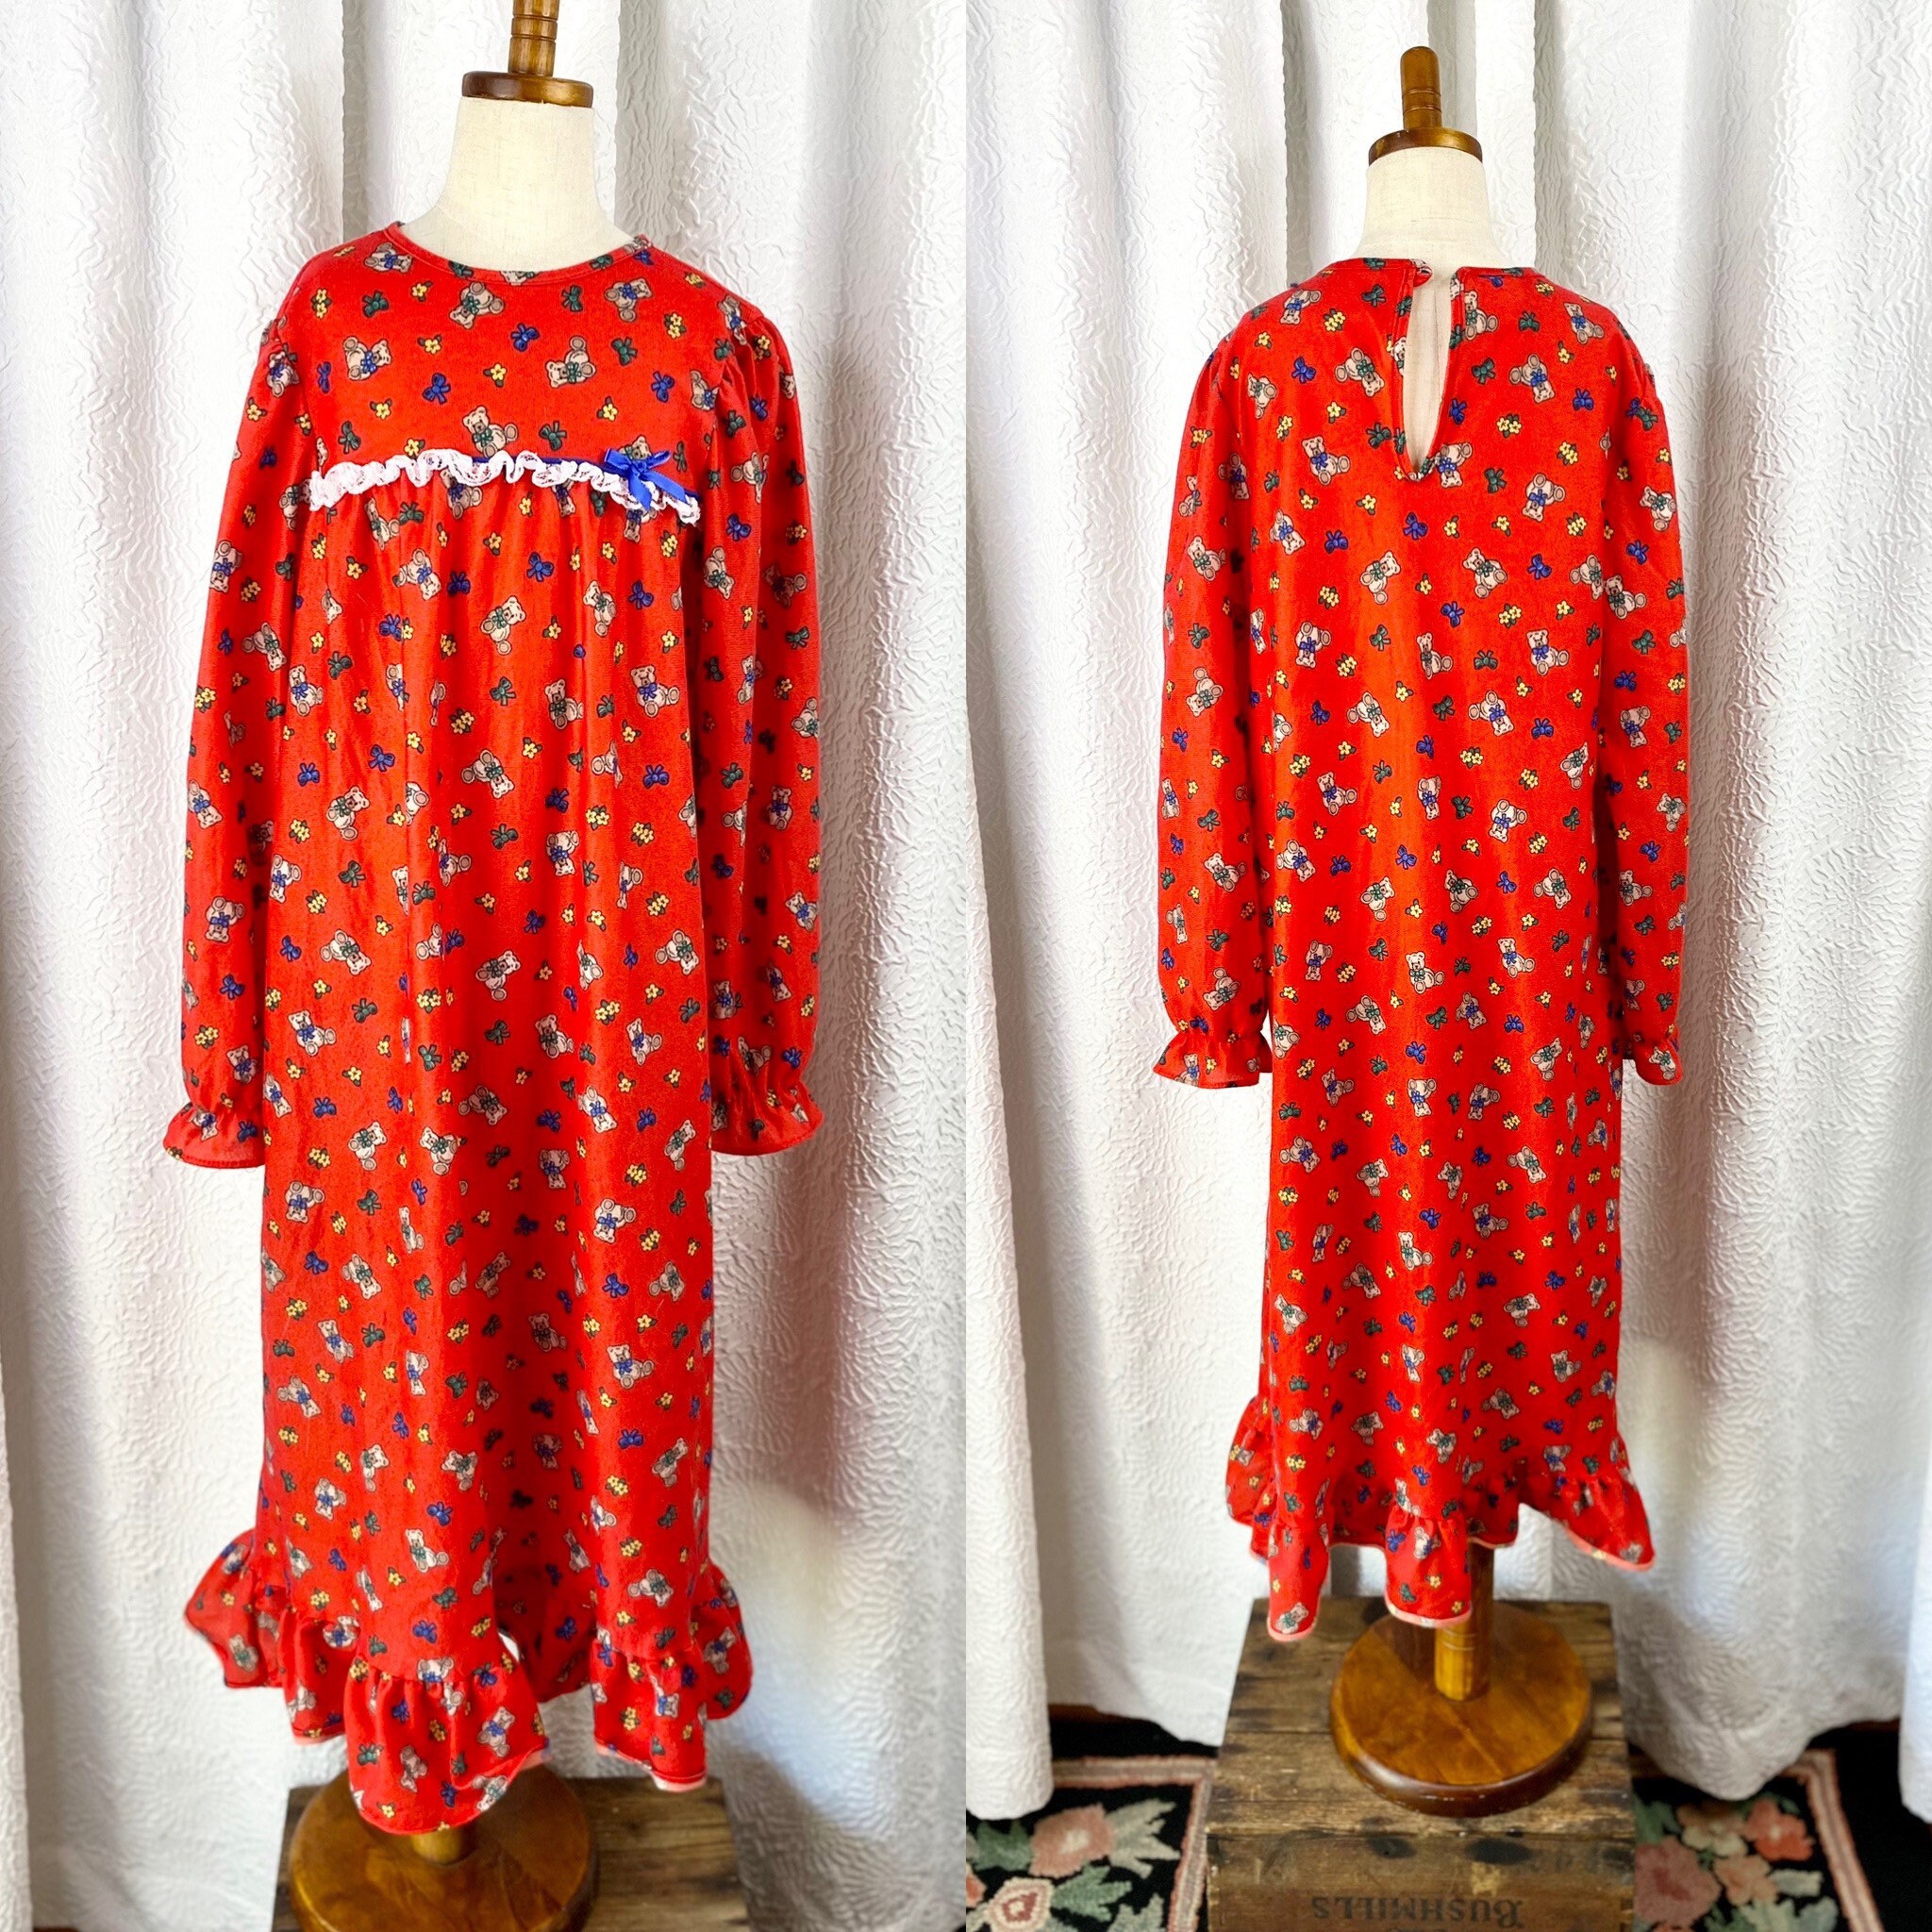 Kleding Meisjeskleding Pyjamas & Badjassen Pyjama Engels Rose vintage stijl 100% katoen bedrukte nachthemd met lange mouwen voor meisjes maten 2-11 jaar made in nederland 